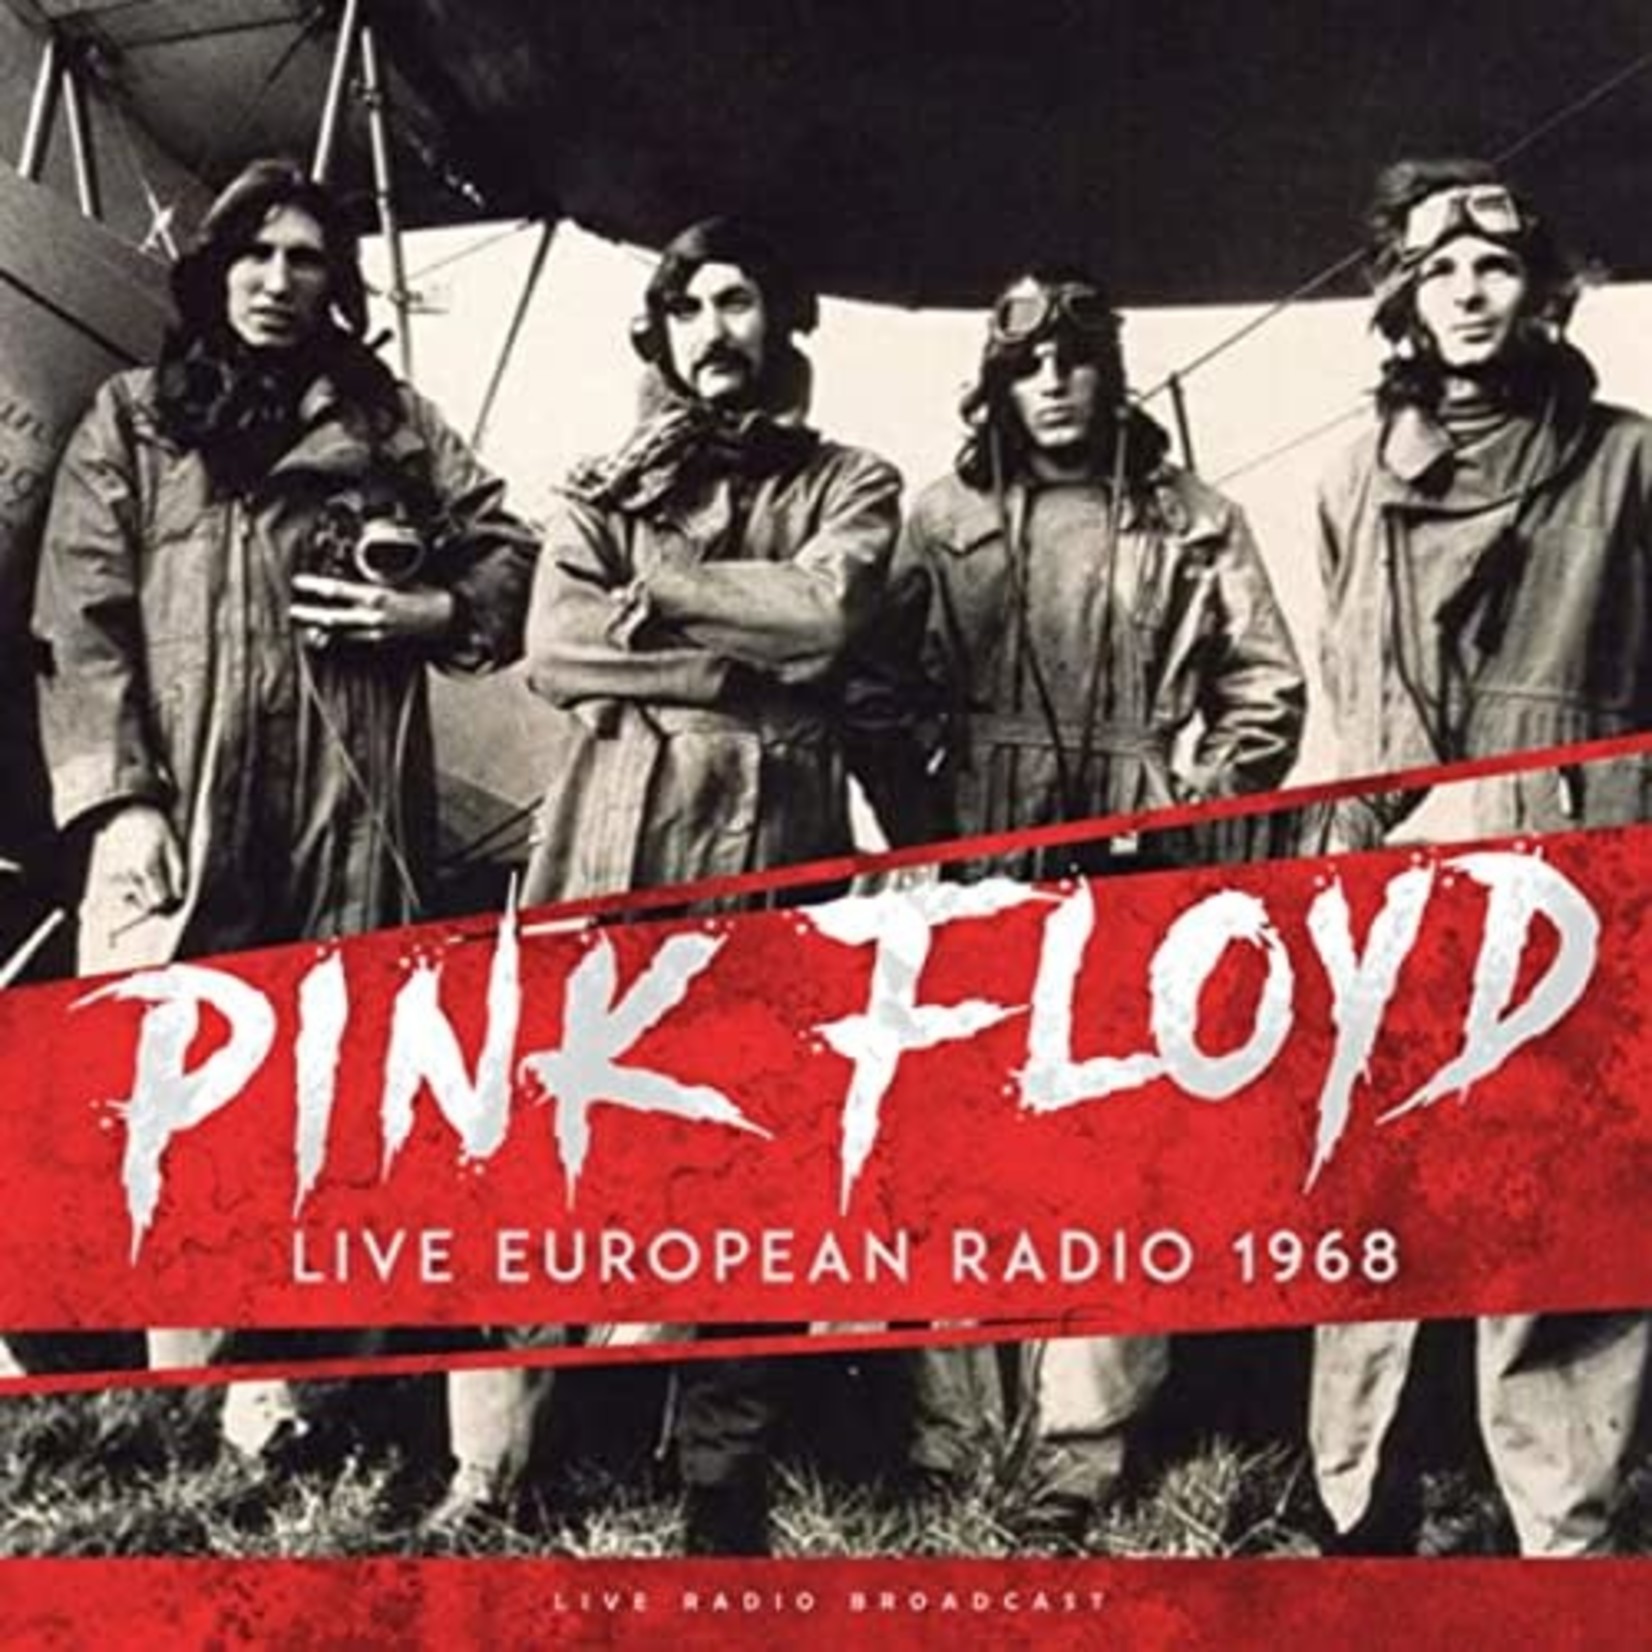 [New] Pink Floyd - Live European Radio 1968